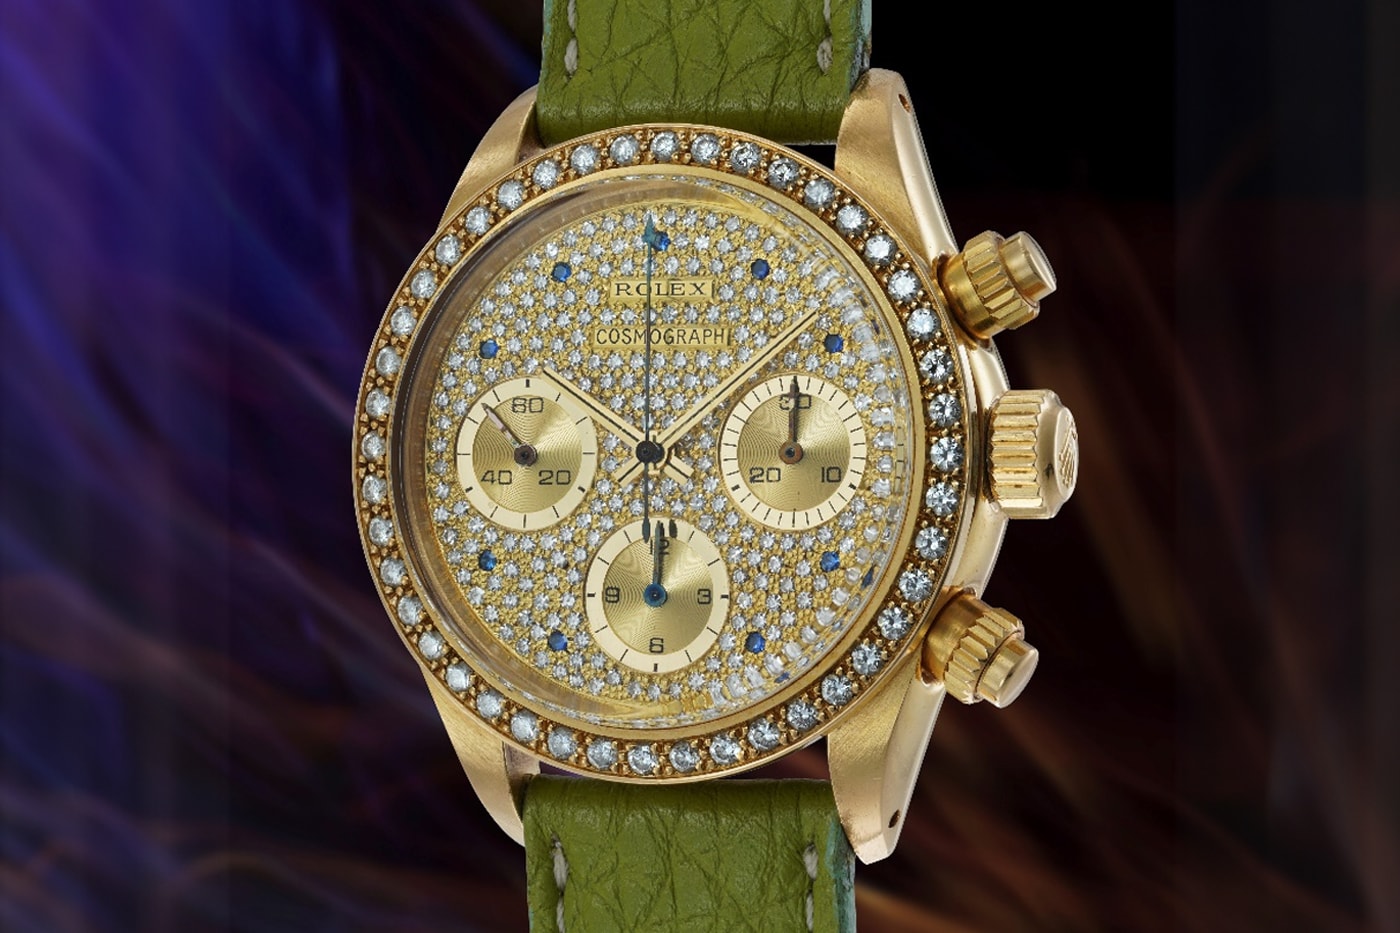 Phillips Geneva Watch Auction: XIX Guido Mondani Rolex Chronograph Ref. 6036 Jean-Claude Killy Collection Highlights 